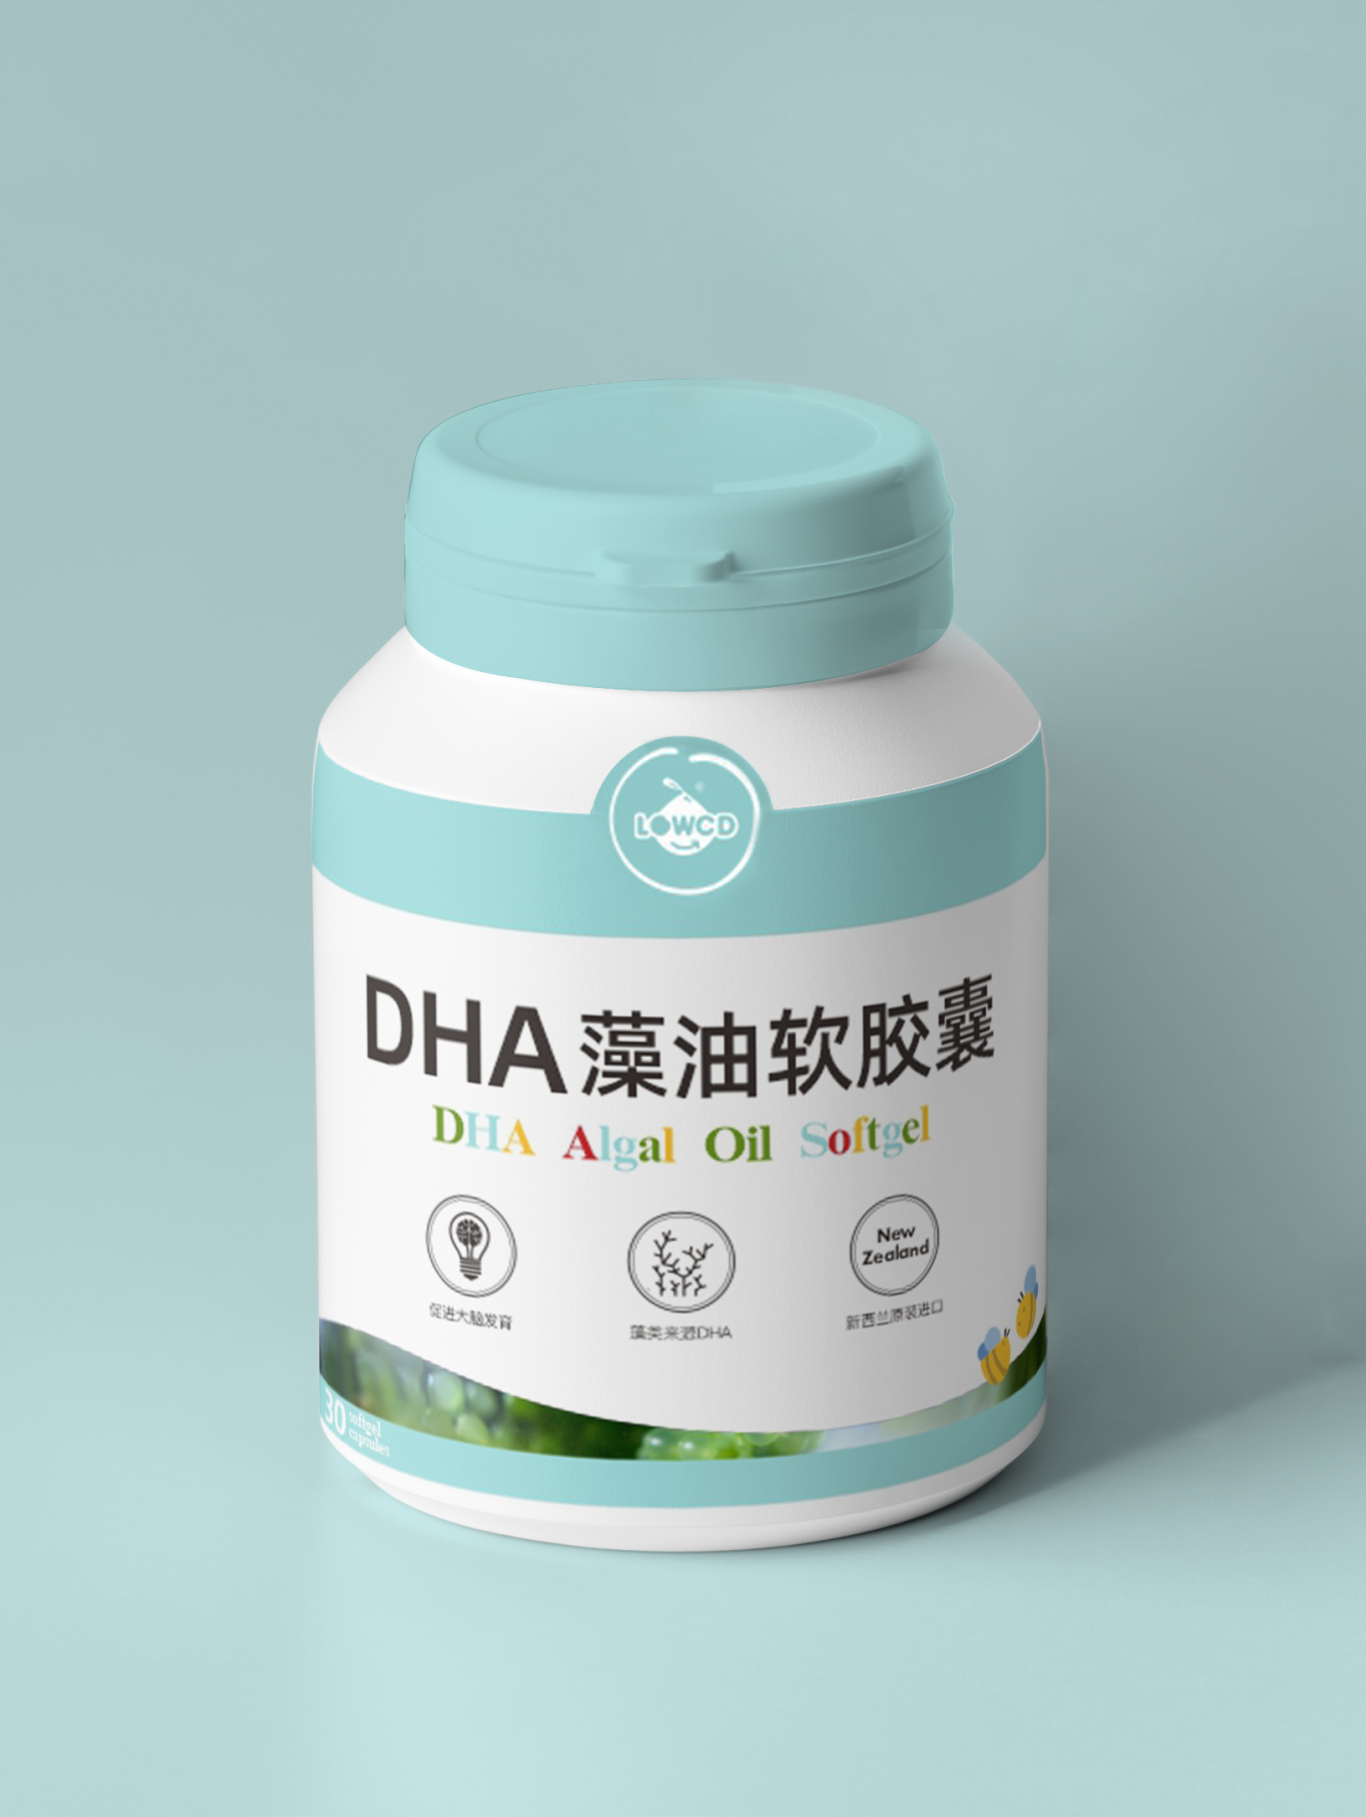 DHA藻油軟膠囊包裝設計圖1